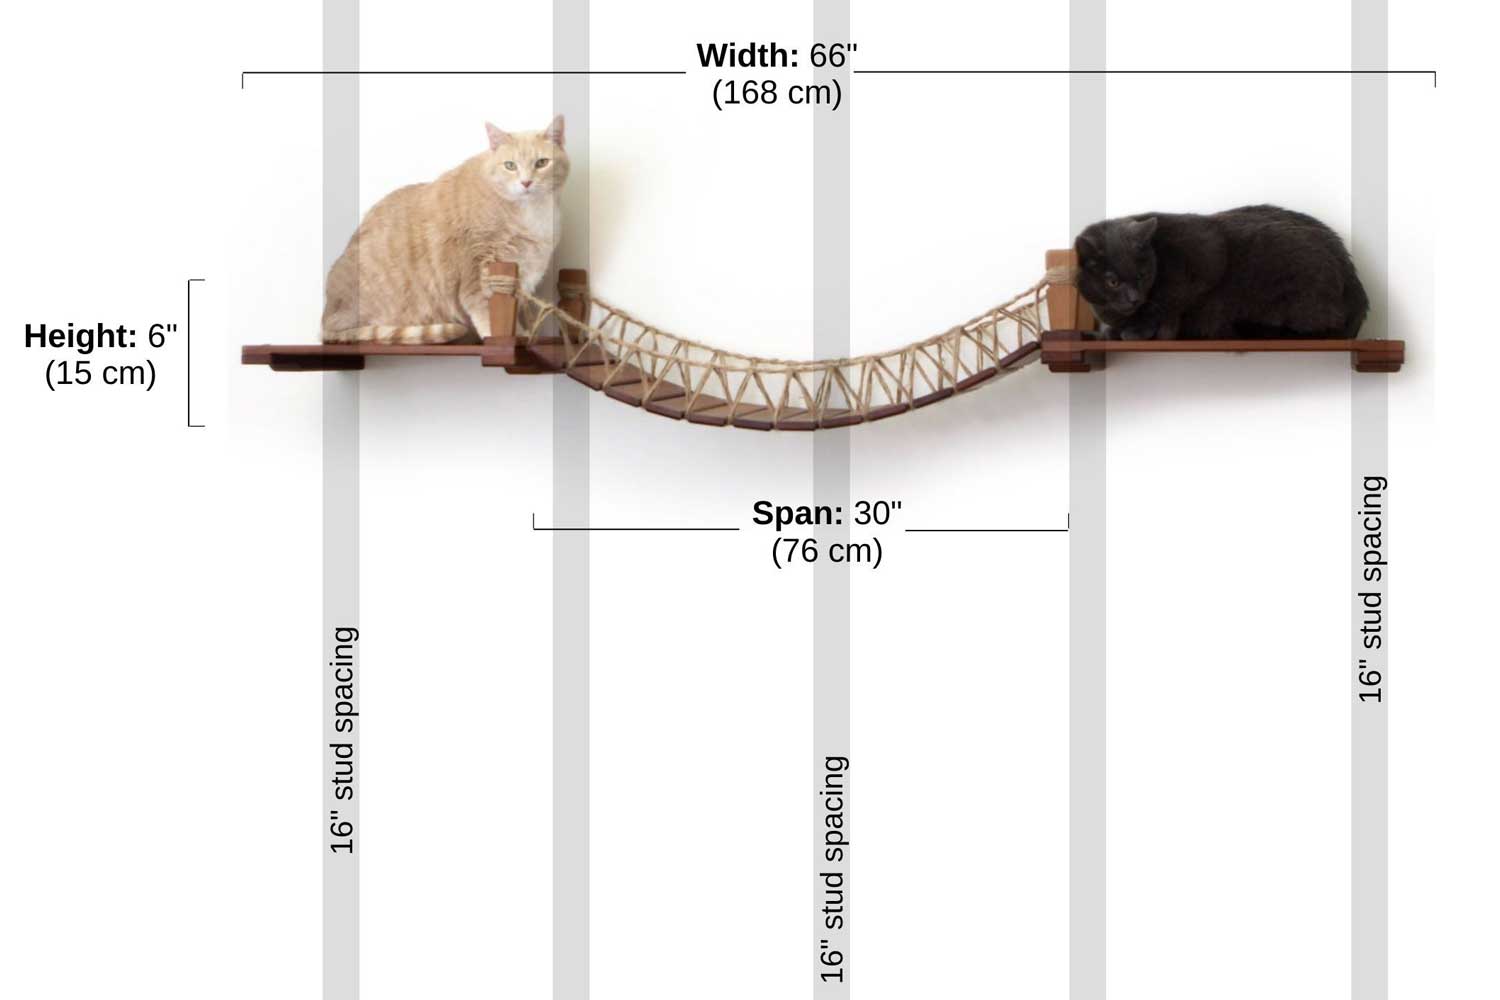 Measurements of a small cat bridge with shelf set